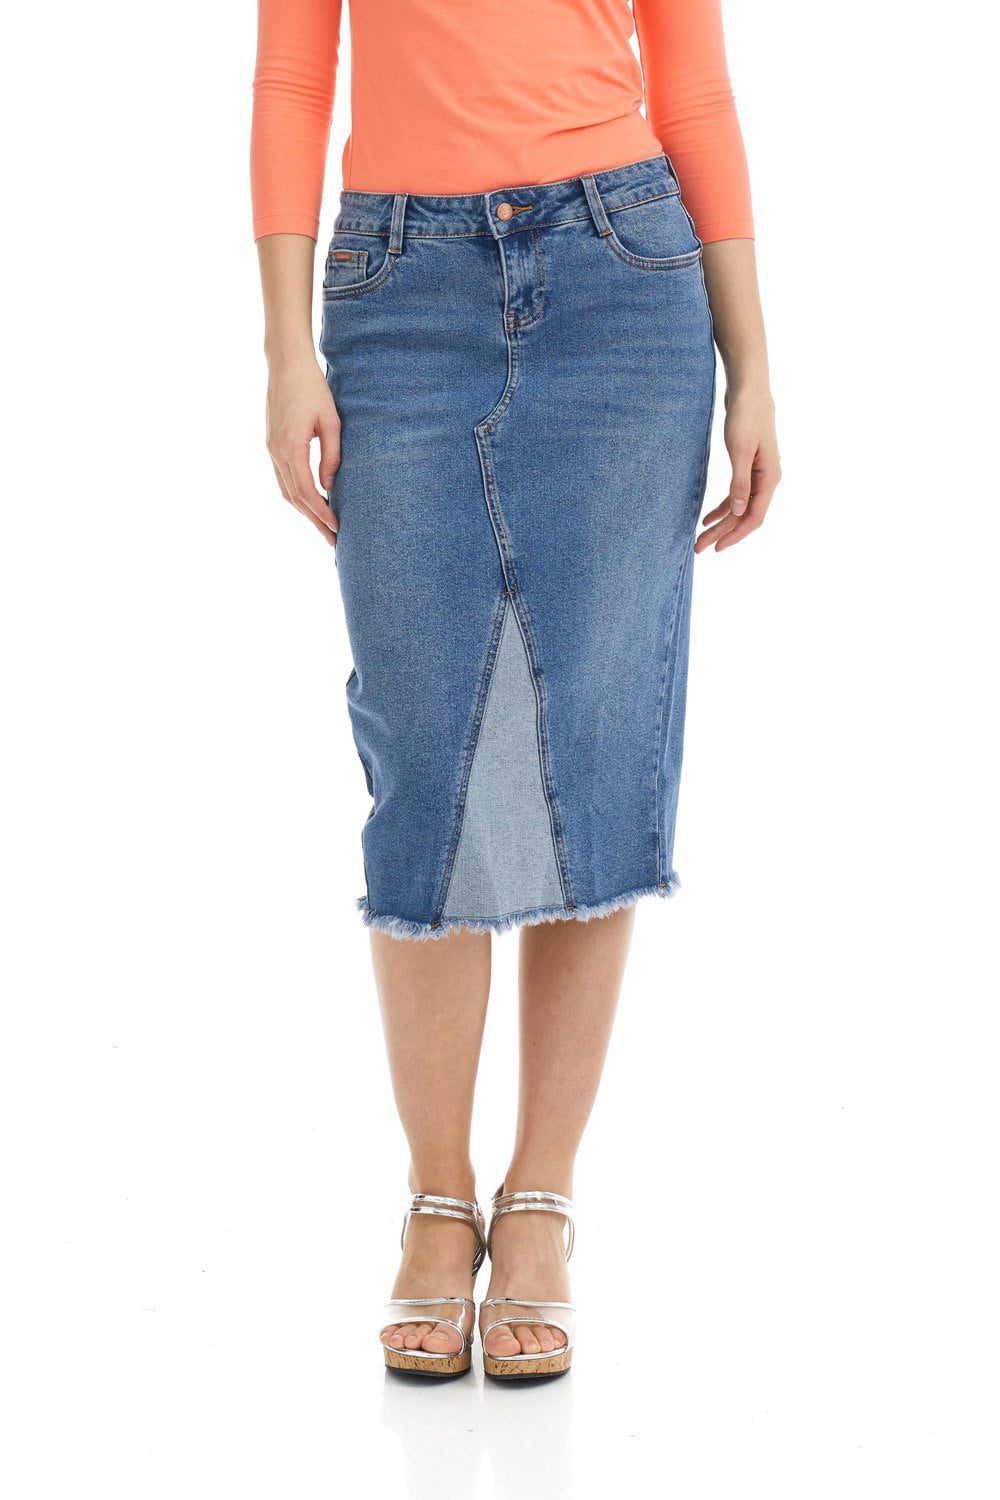 ESTEEZ Womens Stretch Denim Knee Length Jeans Skirt Manhattan